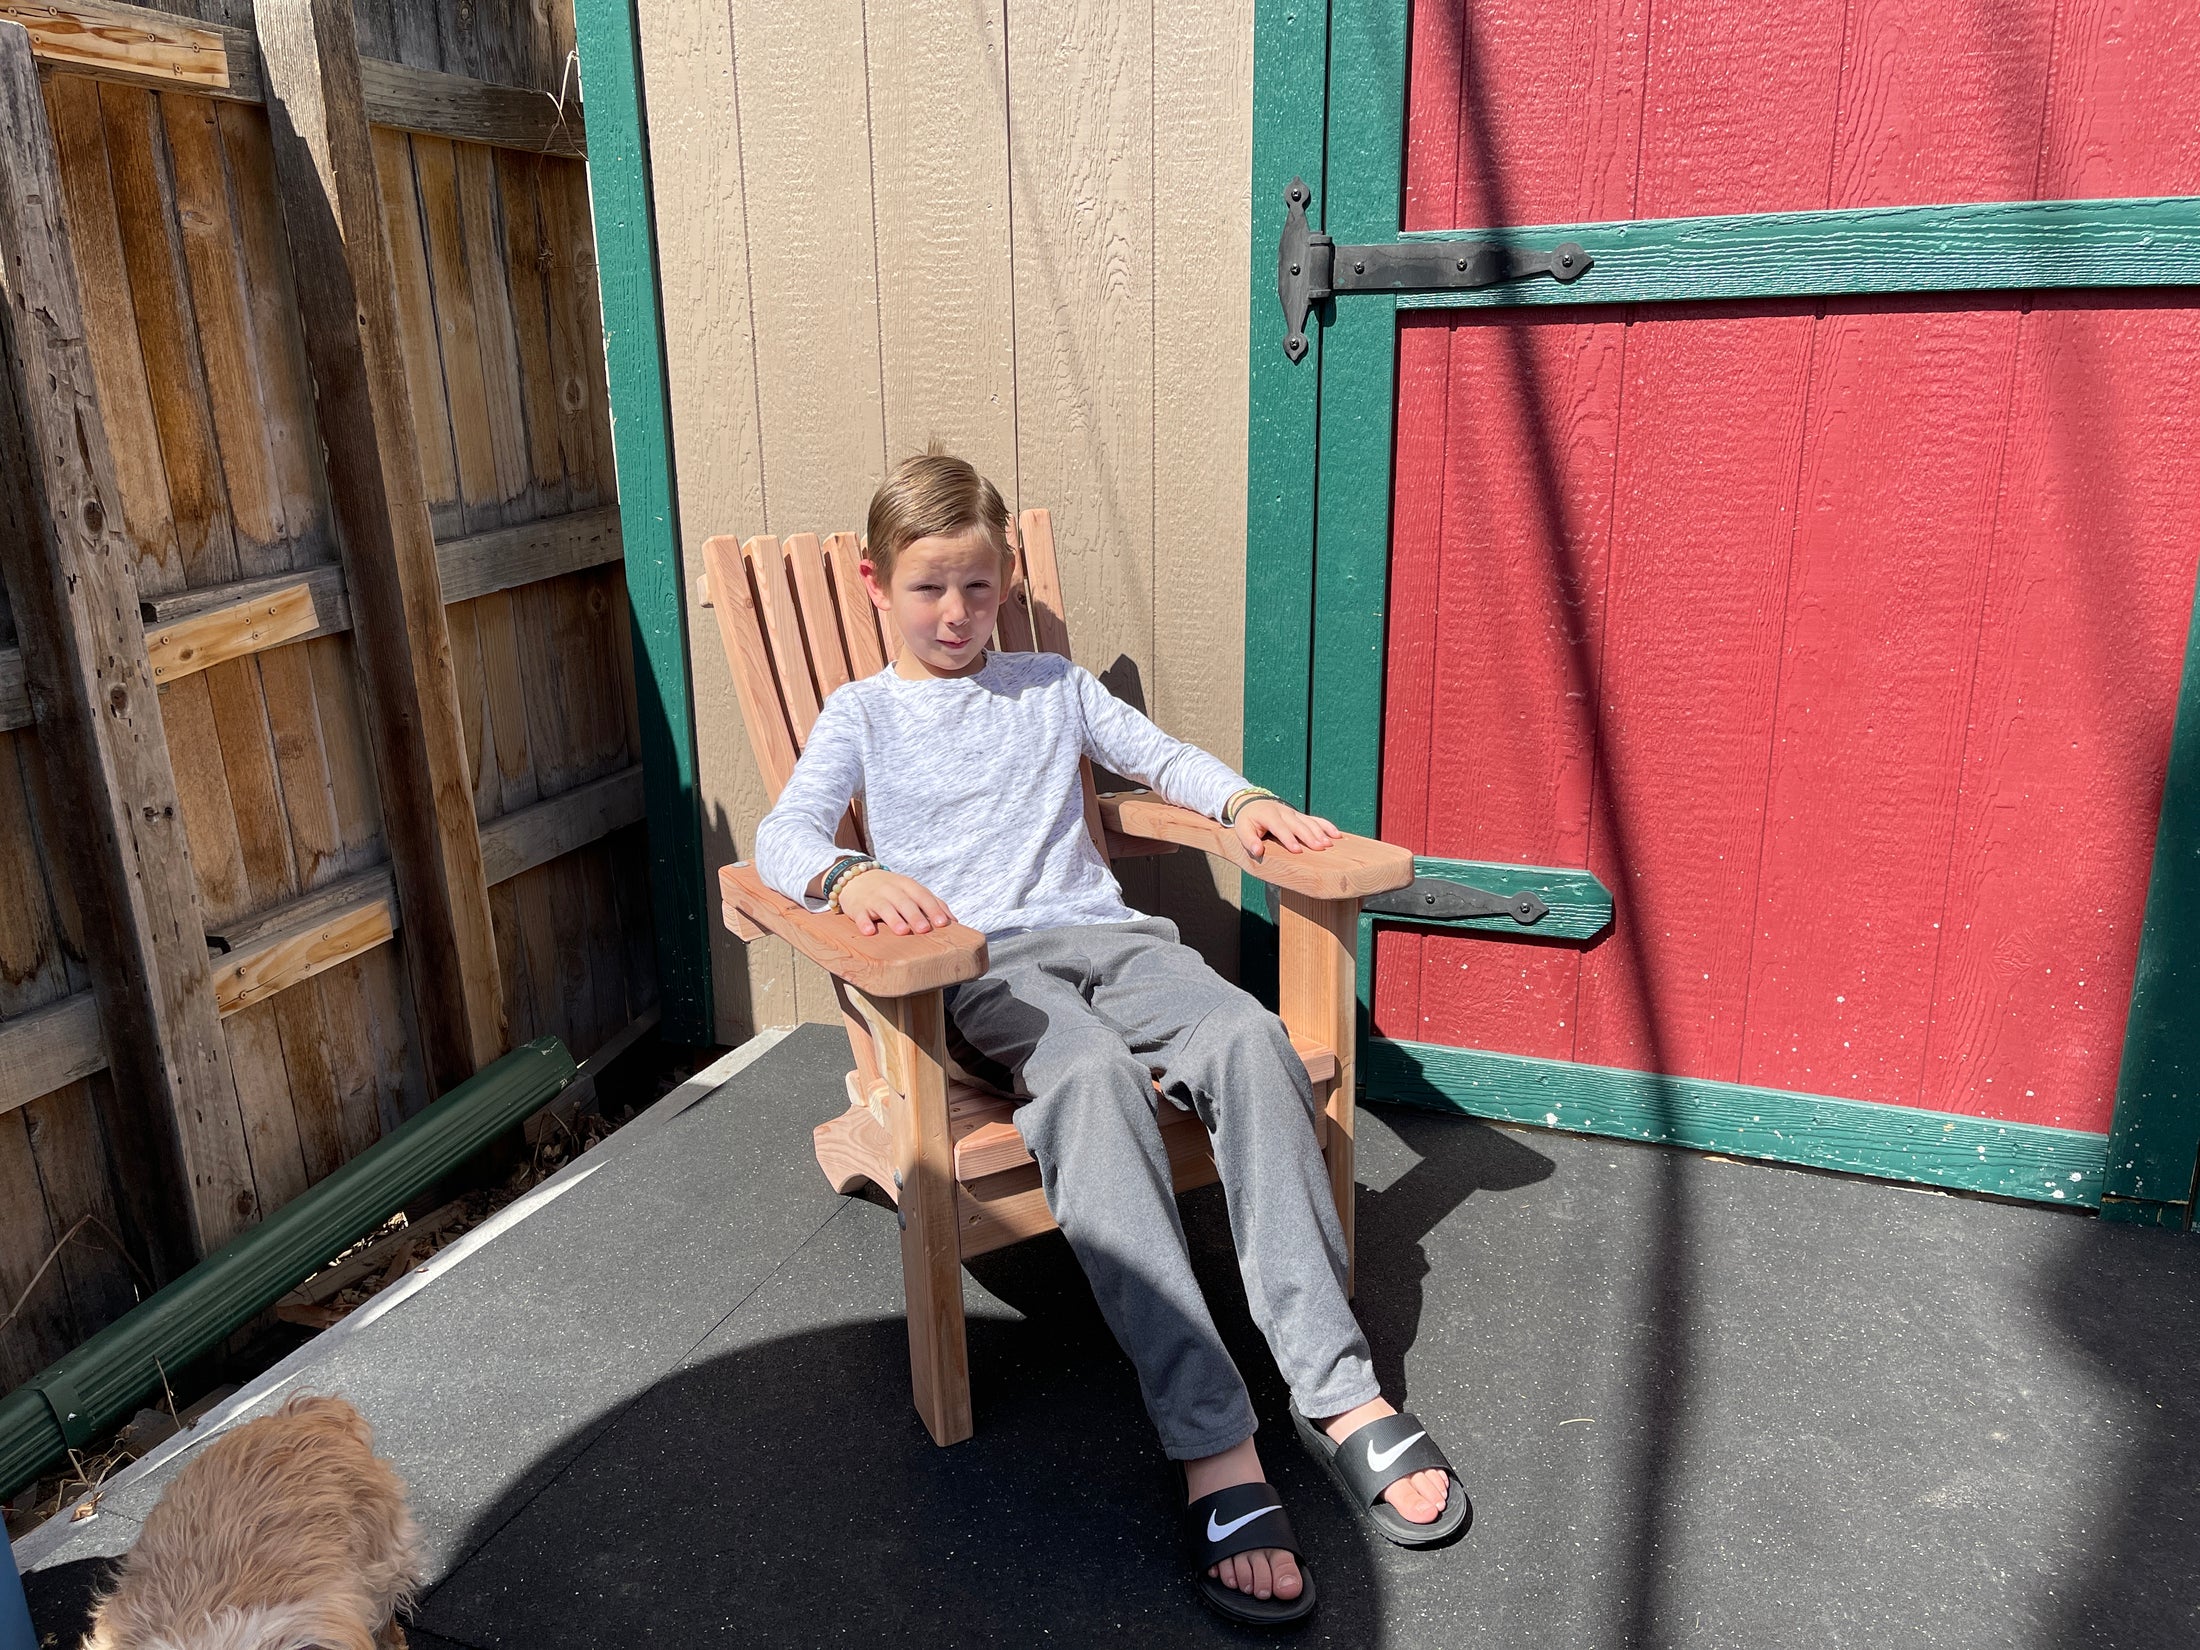 Kid Sized Adirondack Chair, New Comfort Design 3-D Plans